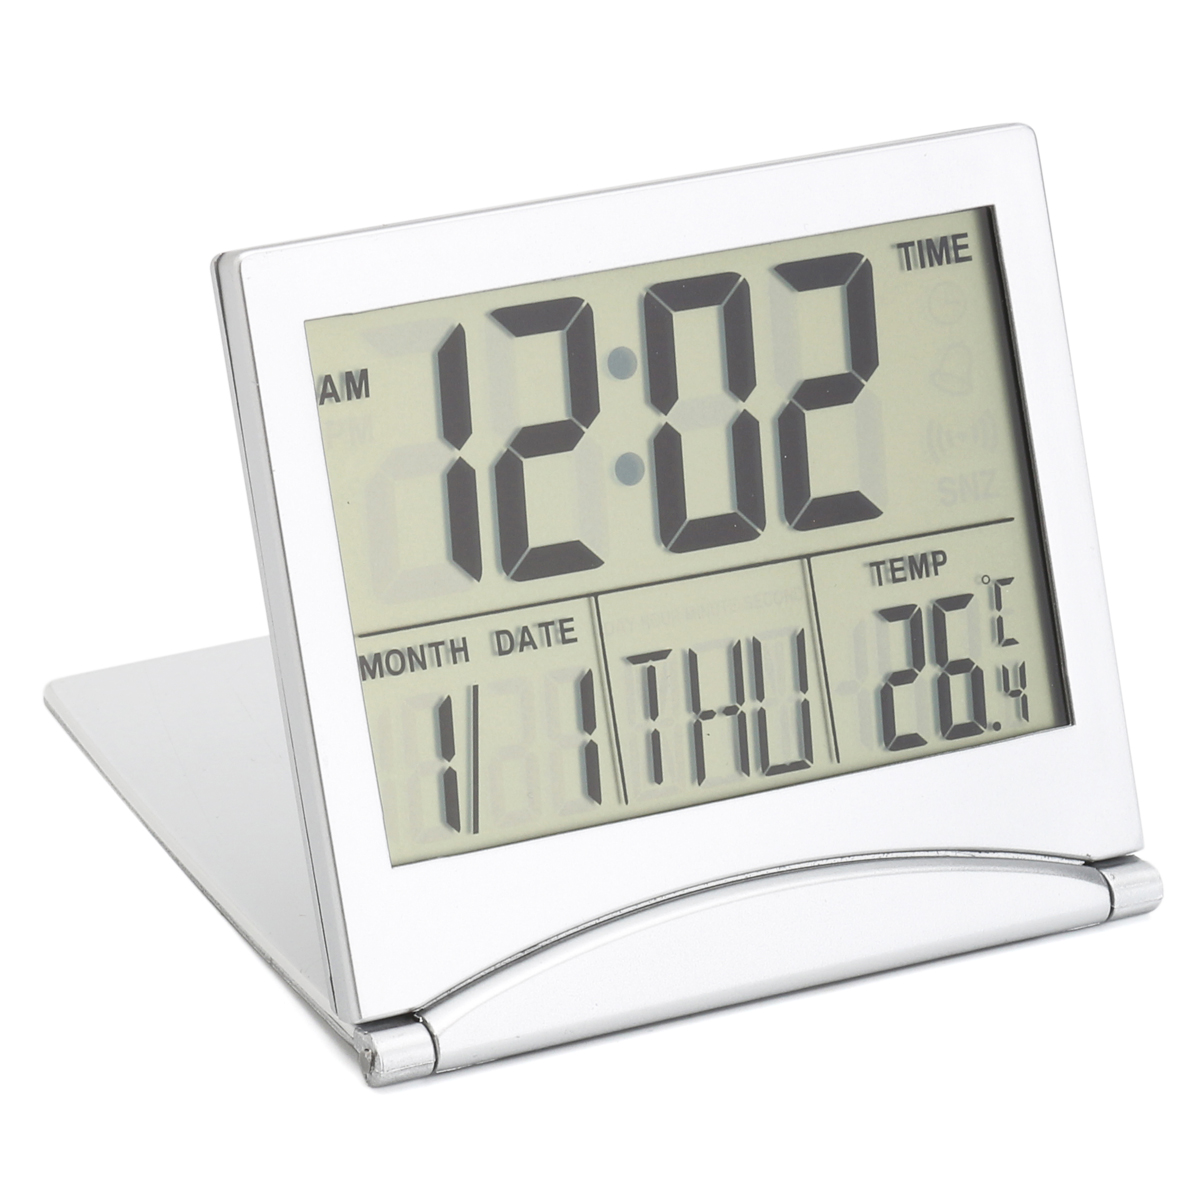 Digital-LCD-Screen-Travel-Alarm-Clocks-Table-Desk-Thermometer-Timer-Calendar-1164394-1